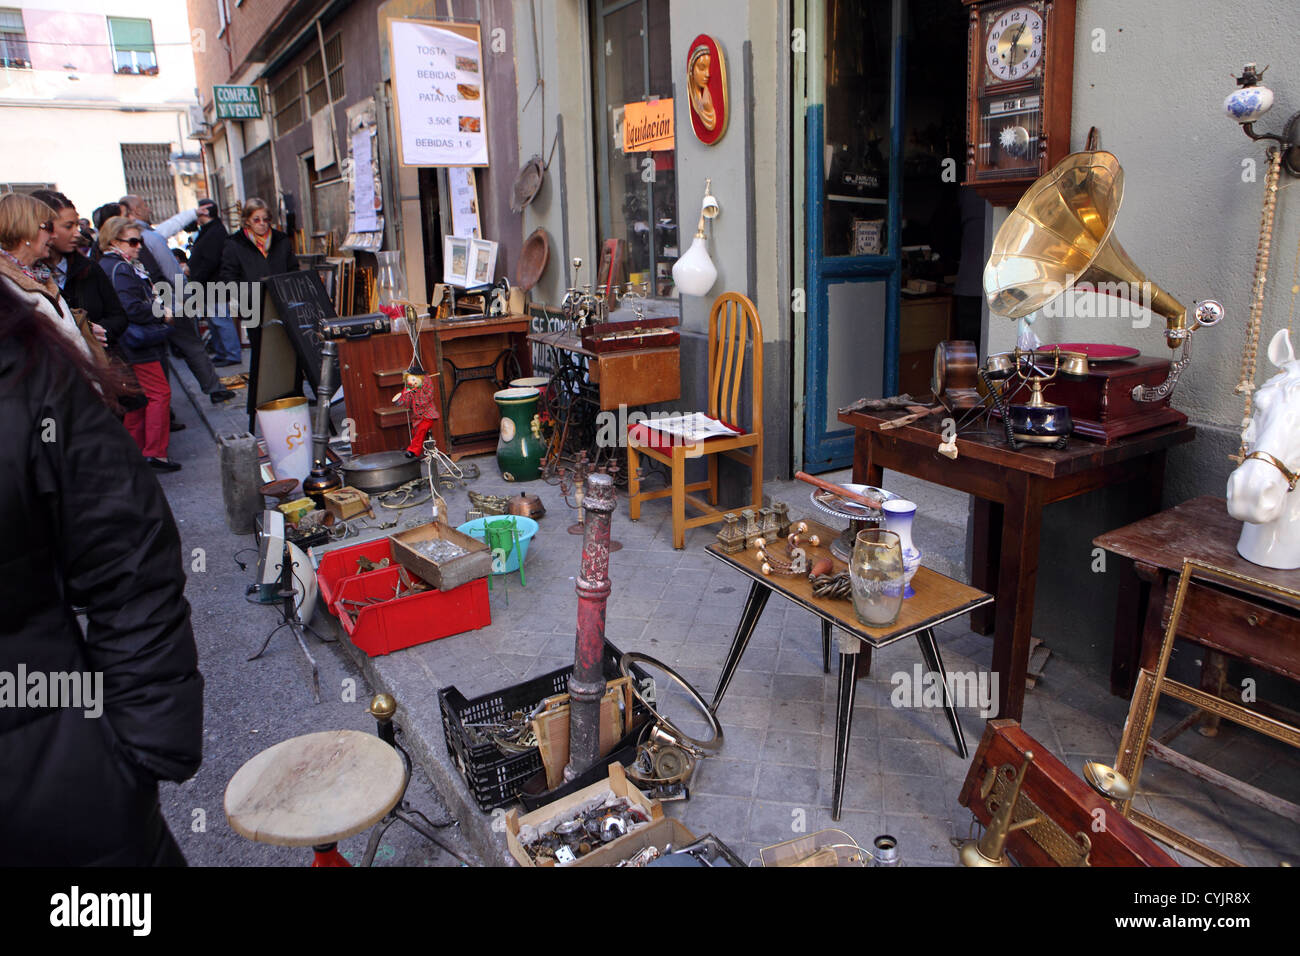 Bric-a-Brac antiques second hand items for sale, El rastro Sunday street market, Madrid, Spain. Stock Photo